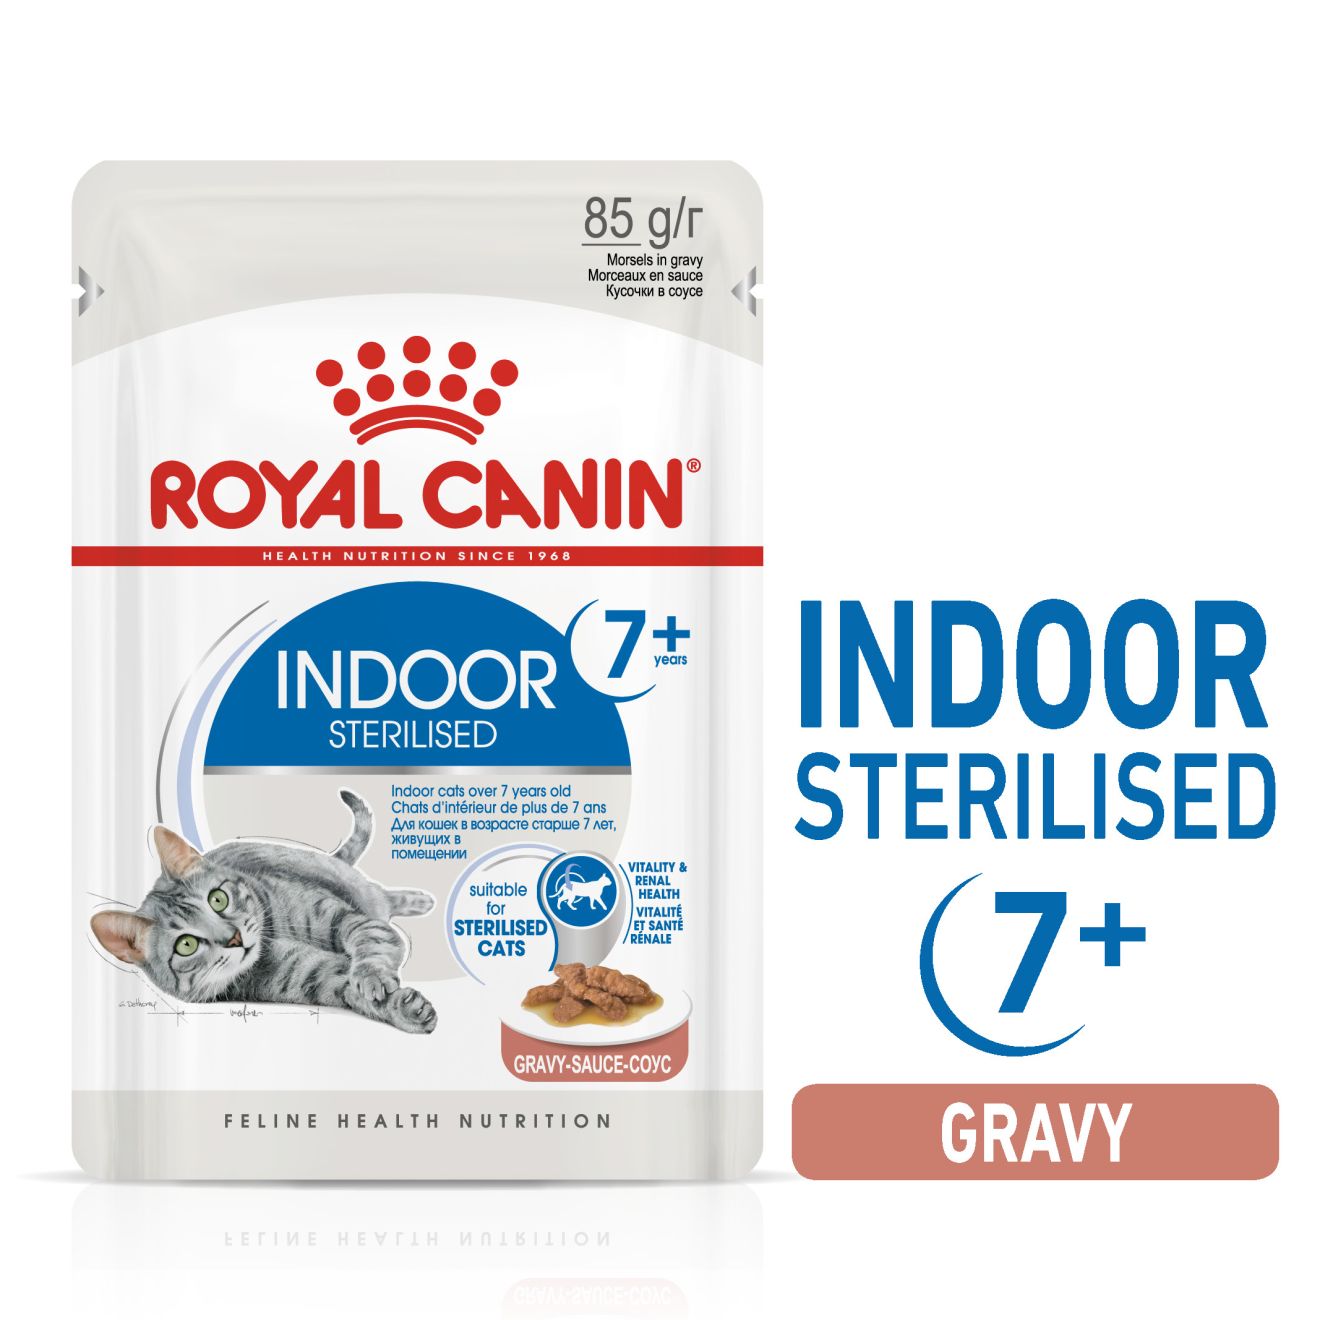 Royal Canin Indoor Sterilised 7+ Gravy อาหารเปียกแมวสูงวัย เลี้ยงในบ้านและทำหมัน อายุ 7ปีขึ้นไป (Gravy) (85g)